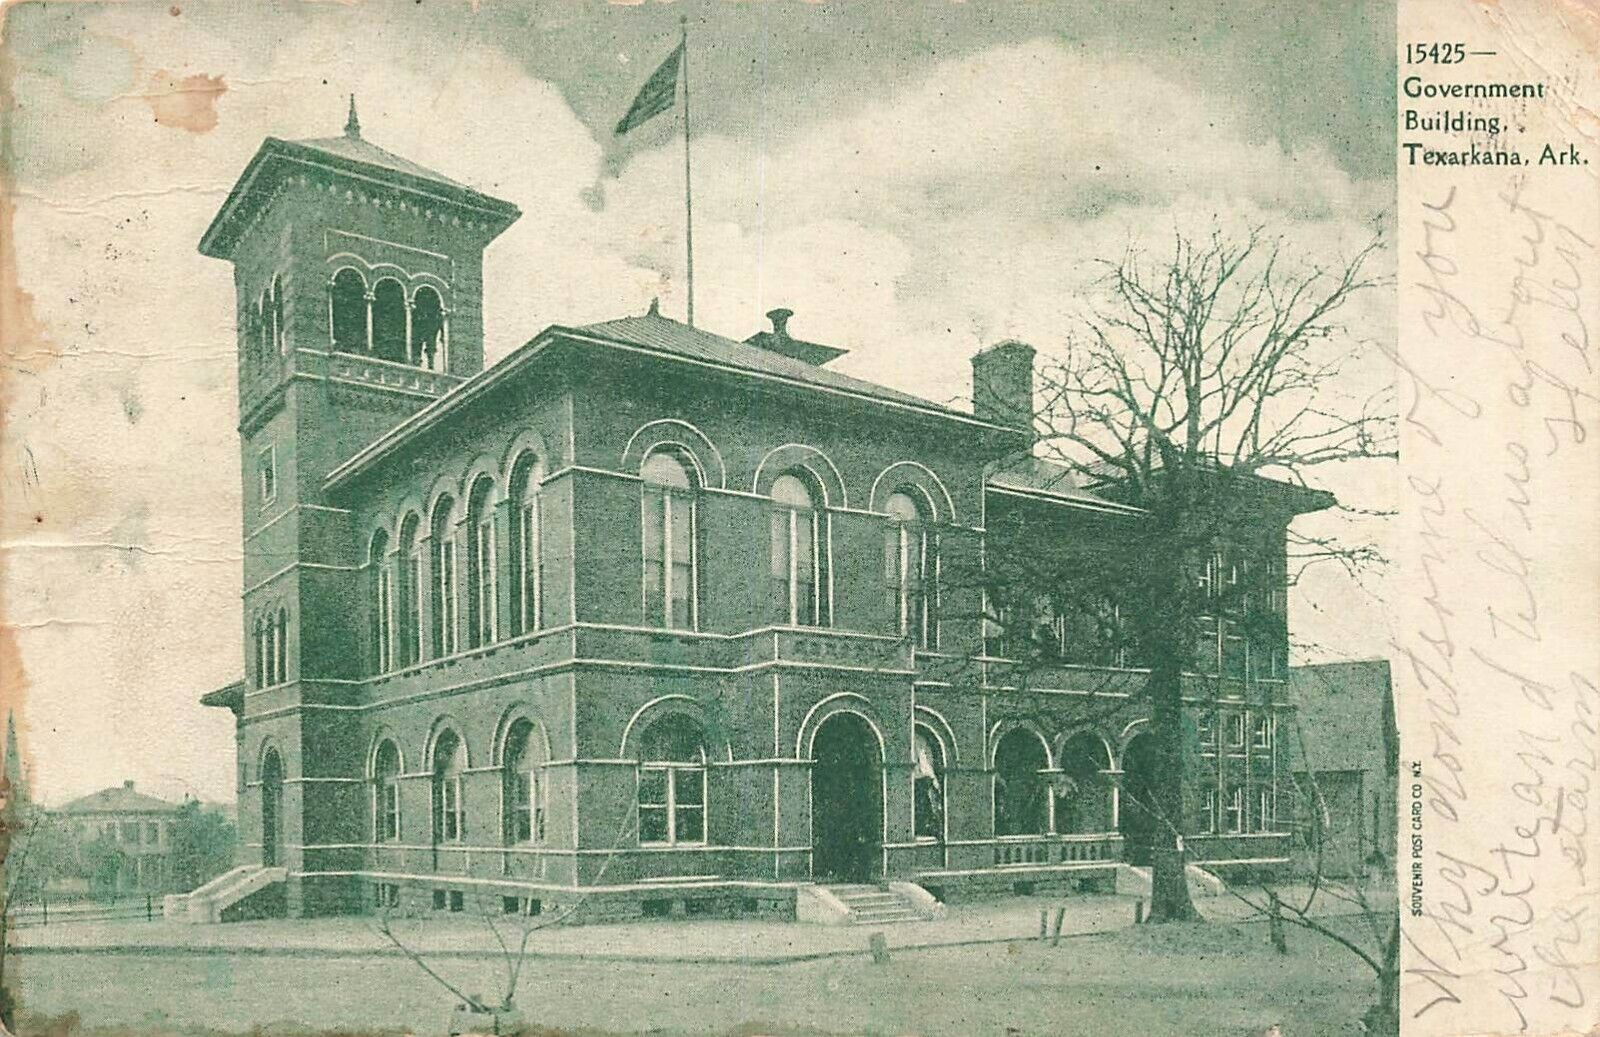 1906 ARKANSAS PHOTO POSTCARD: GOVERNMENT BUILDING, TEXARKANA, AR